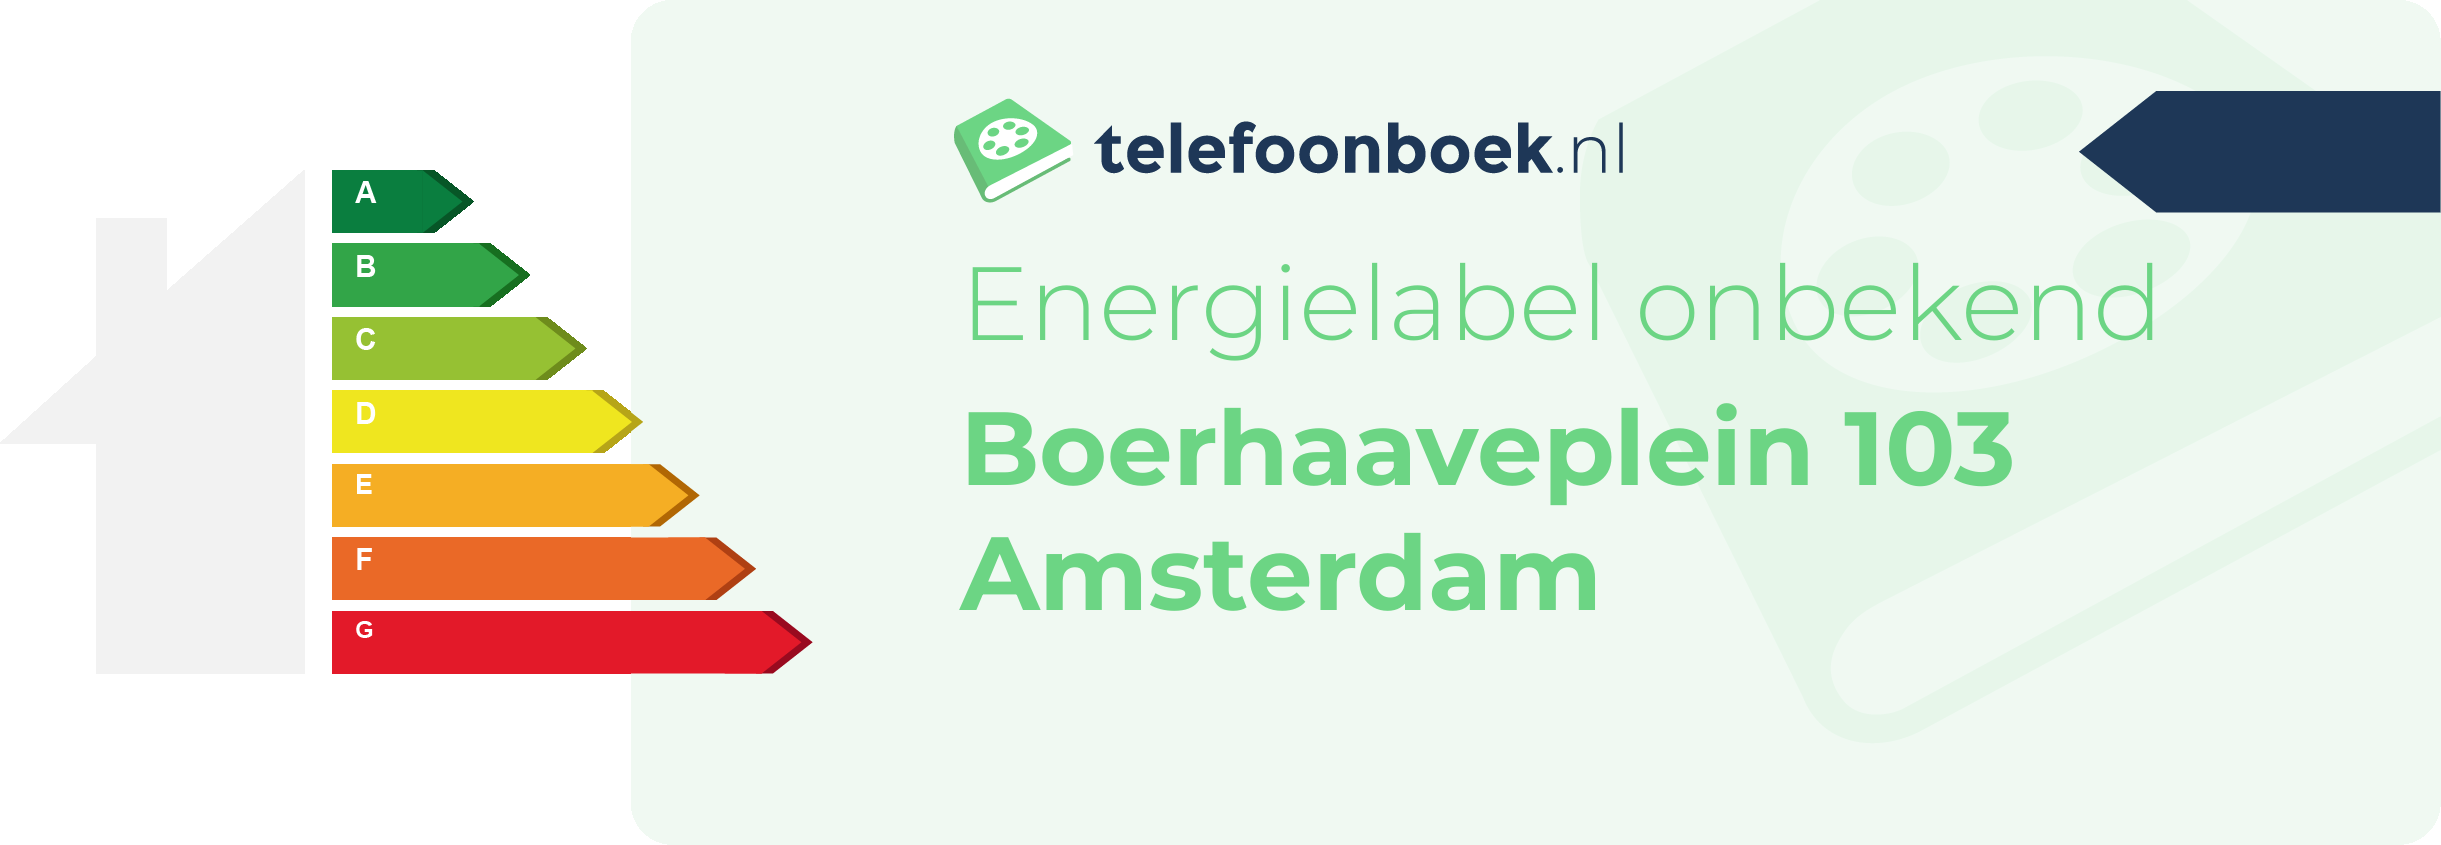 Energielabel Boerhaaveplein 103 Amsterdam